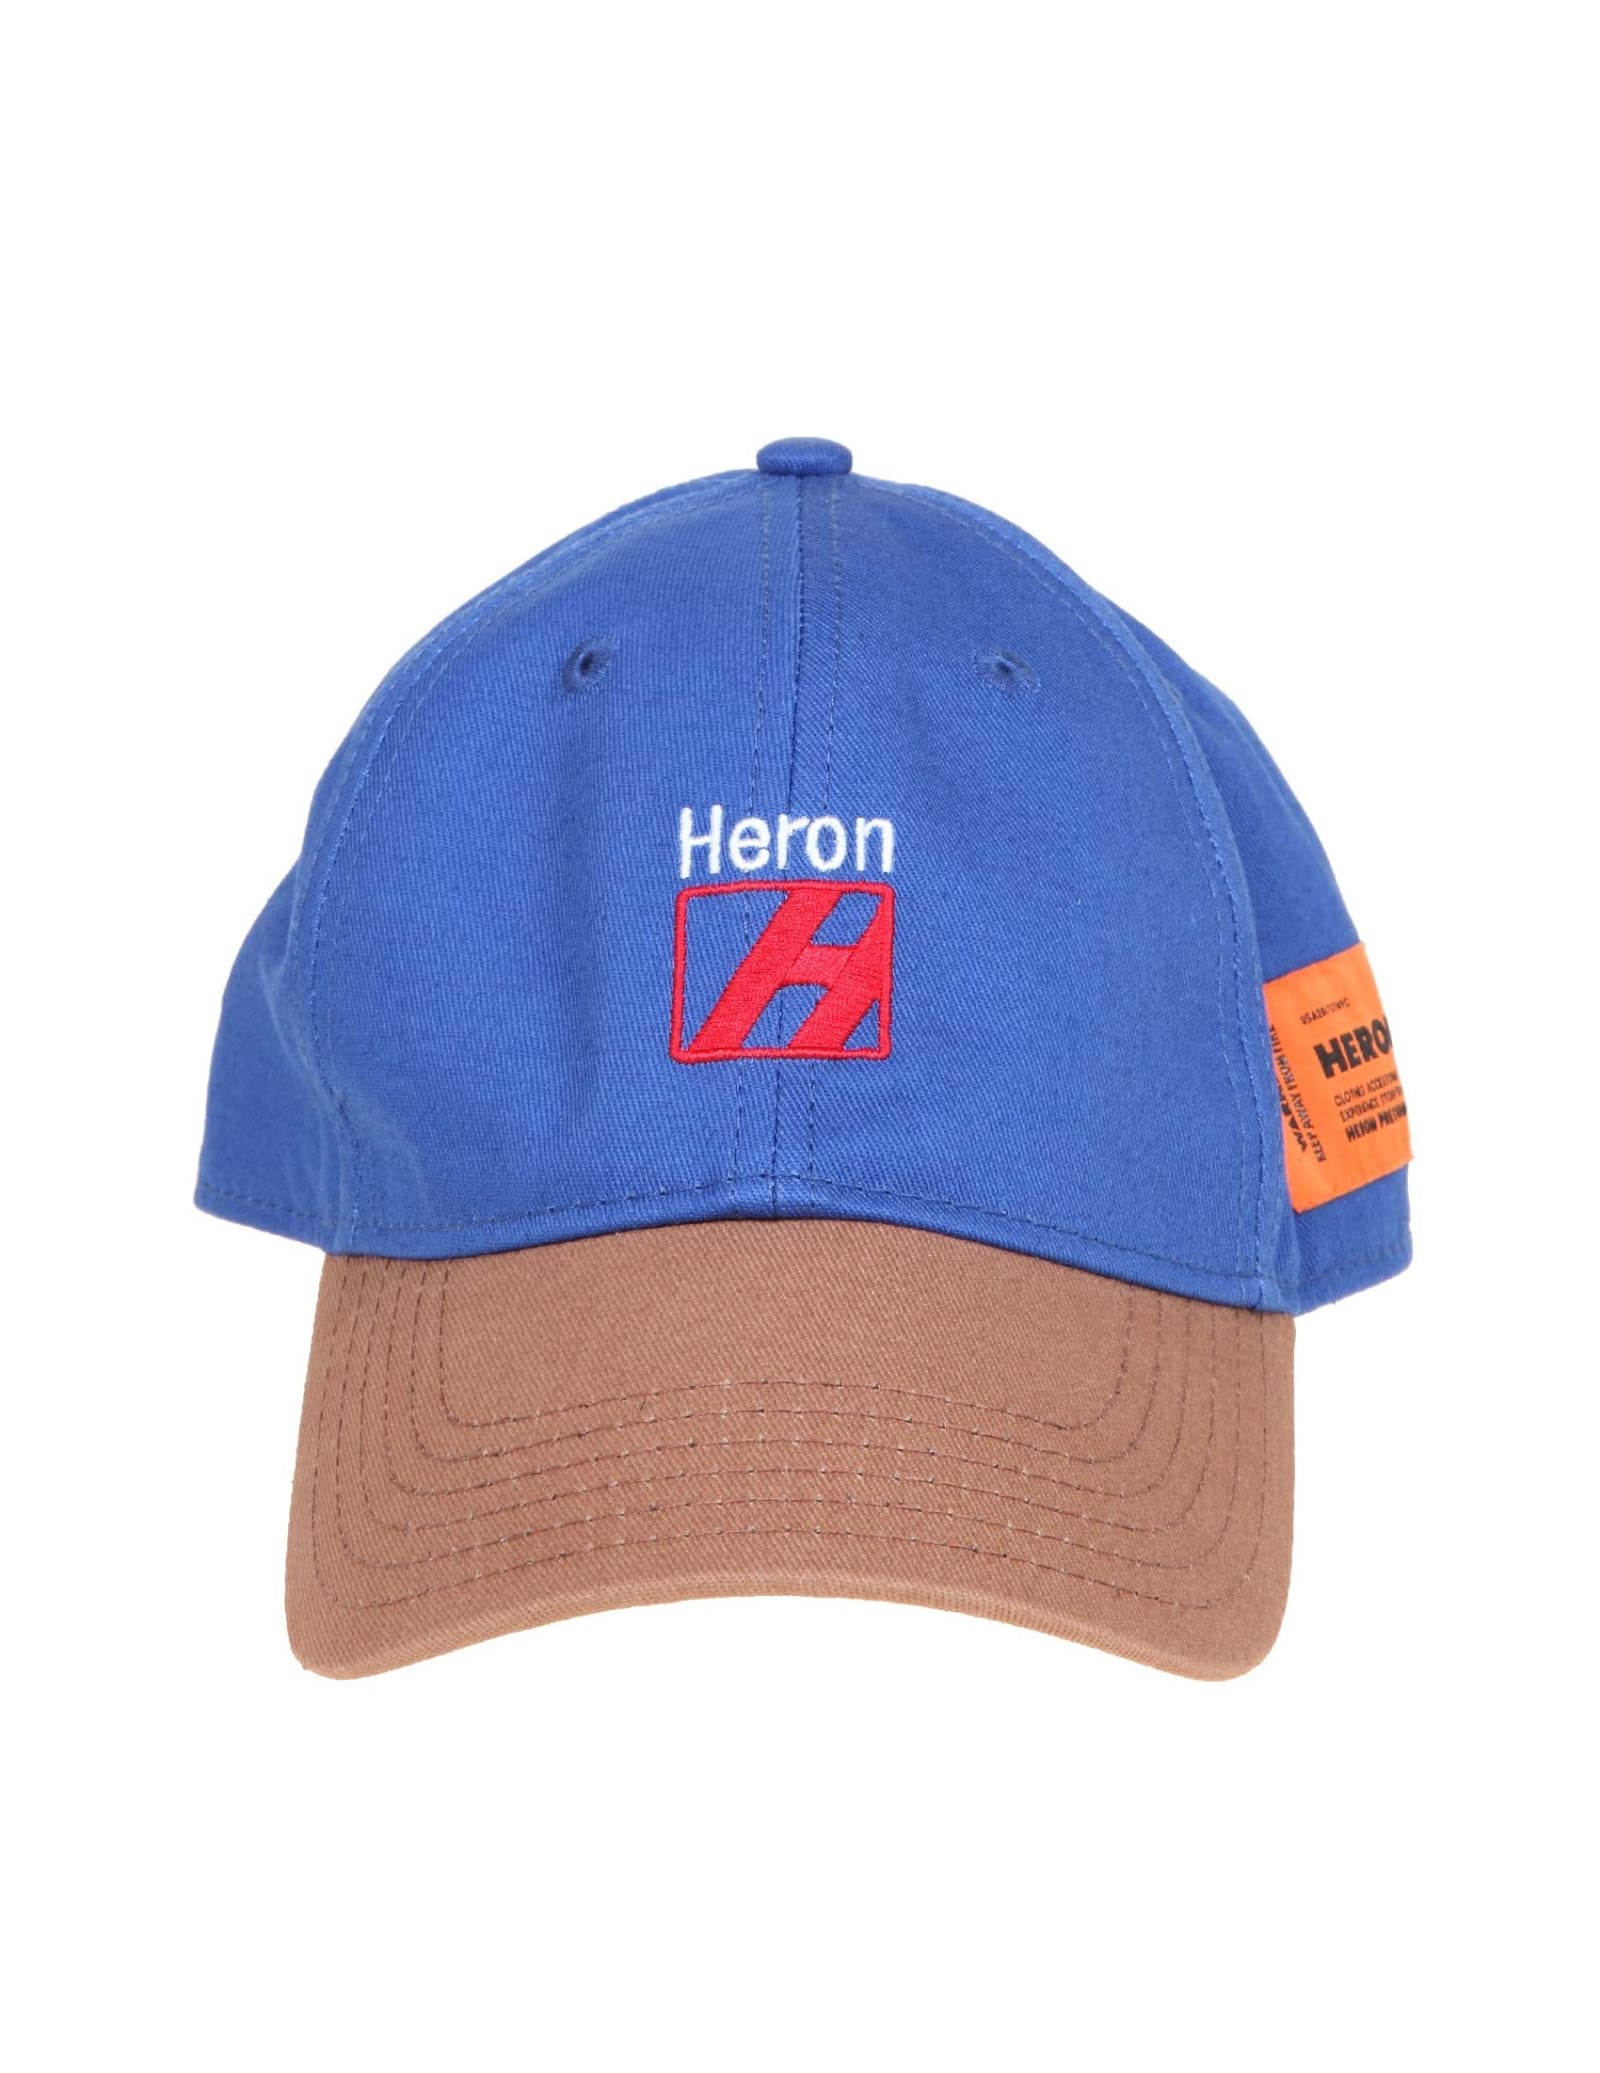 HERON PRESTON HAT WITH FRONT LOGO BROWN COLOR